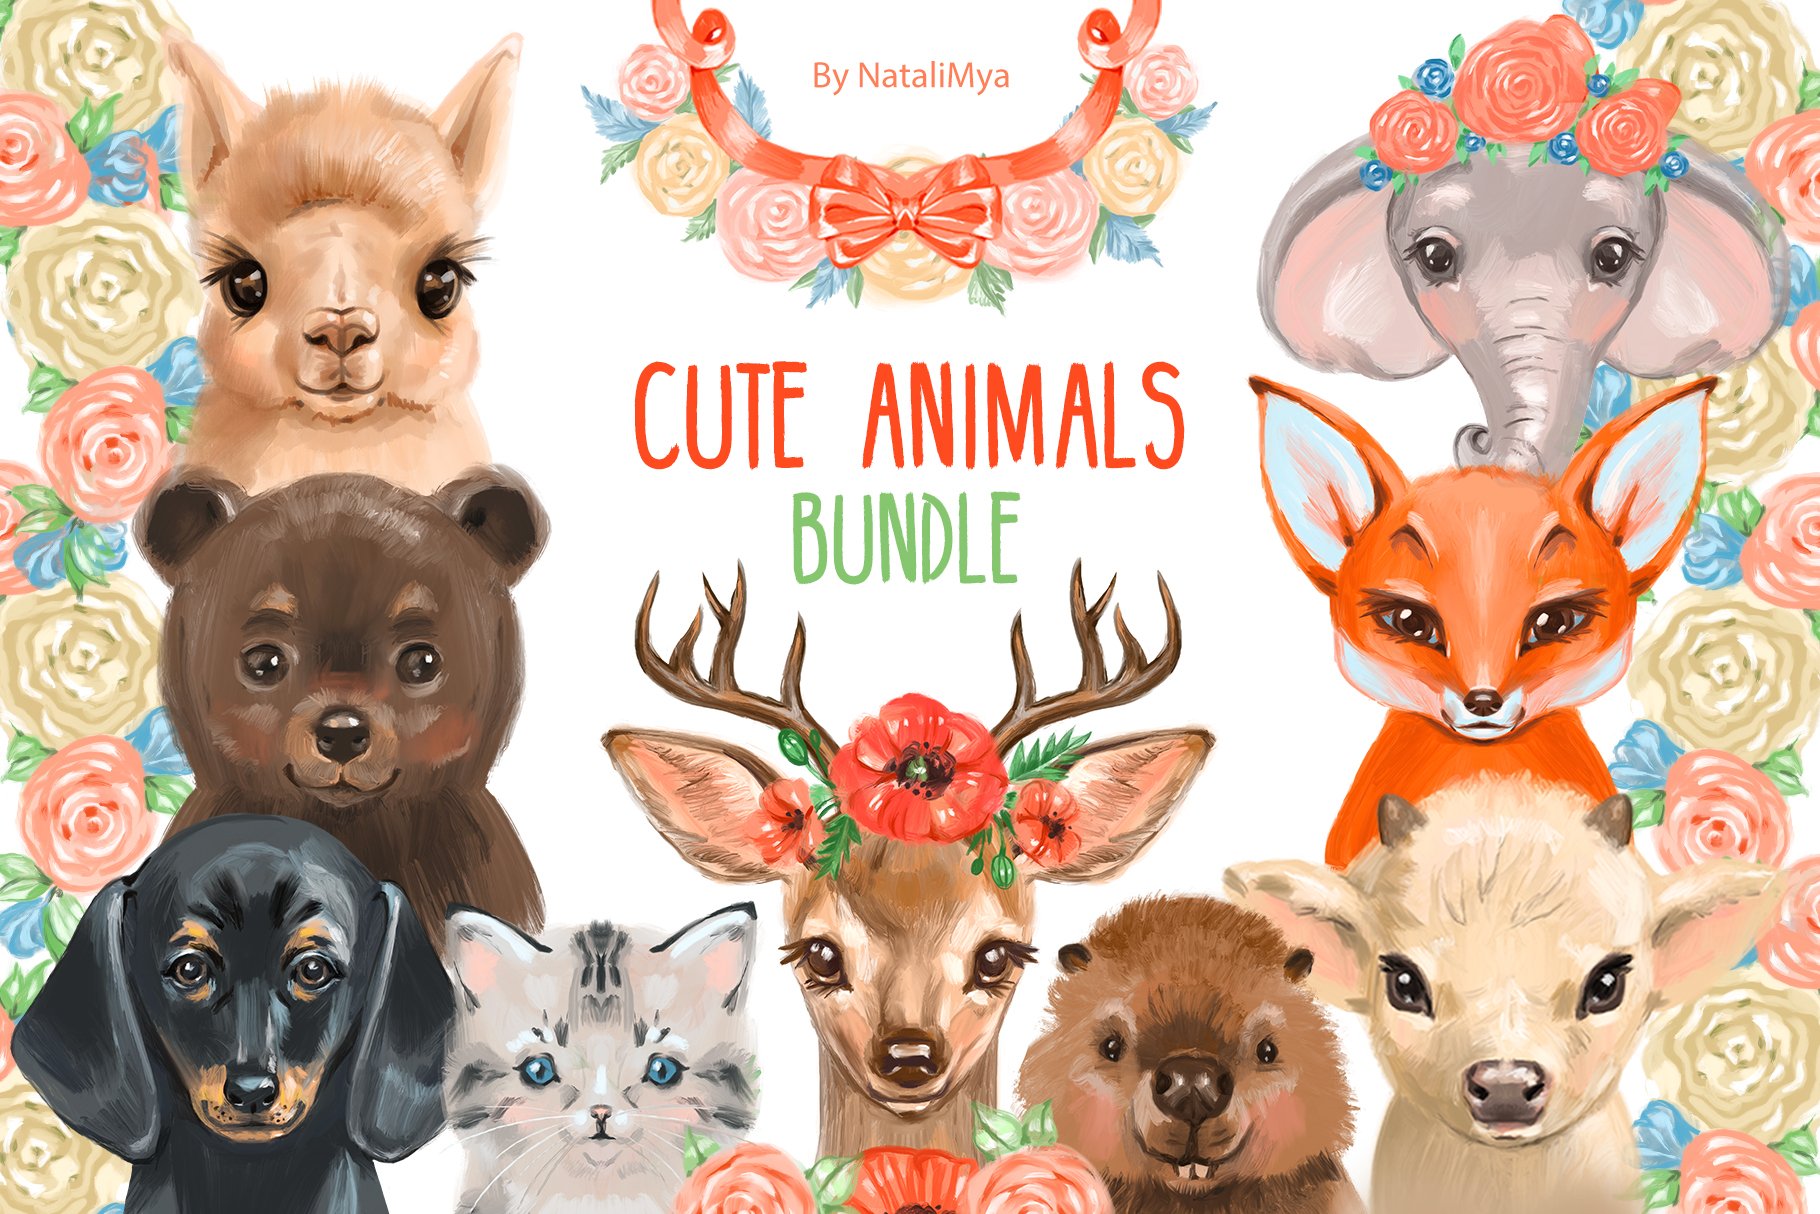 Cute animals BUNDLE cover image.